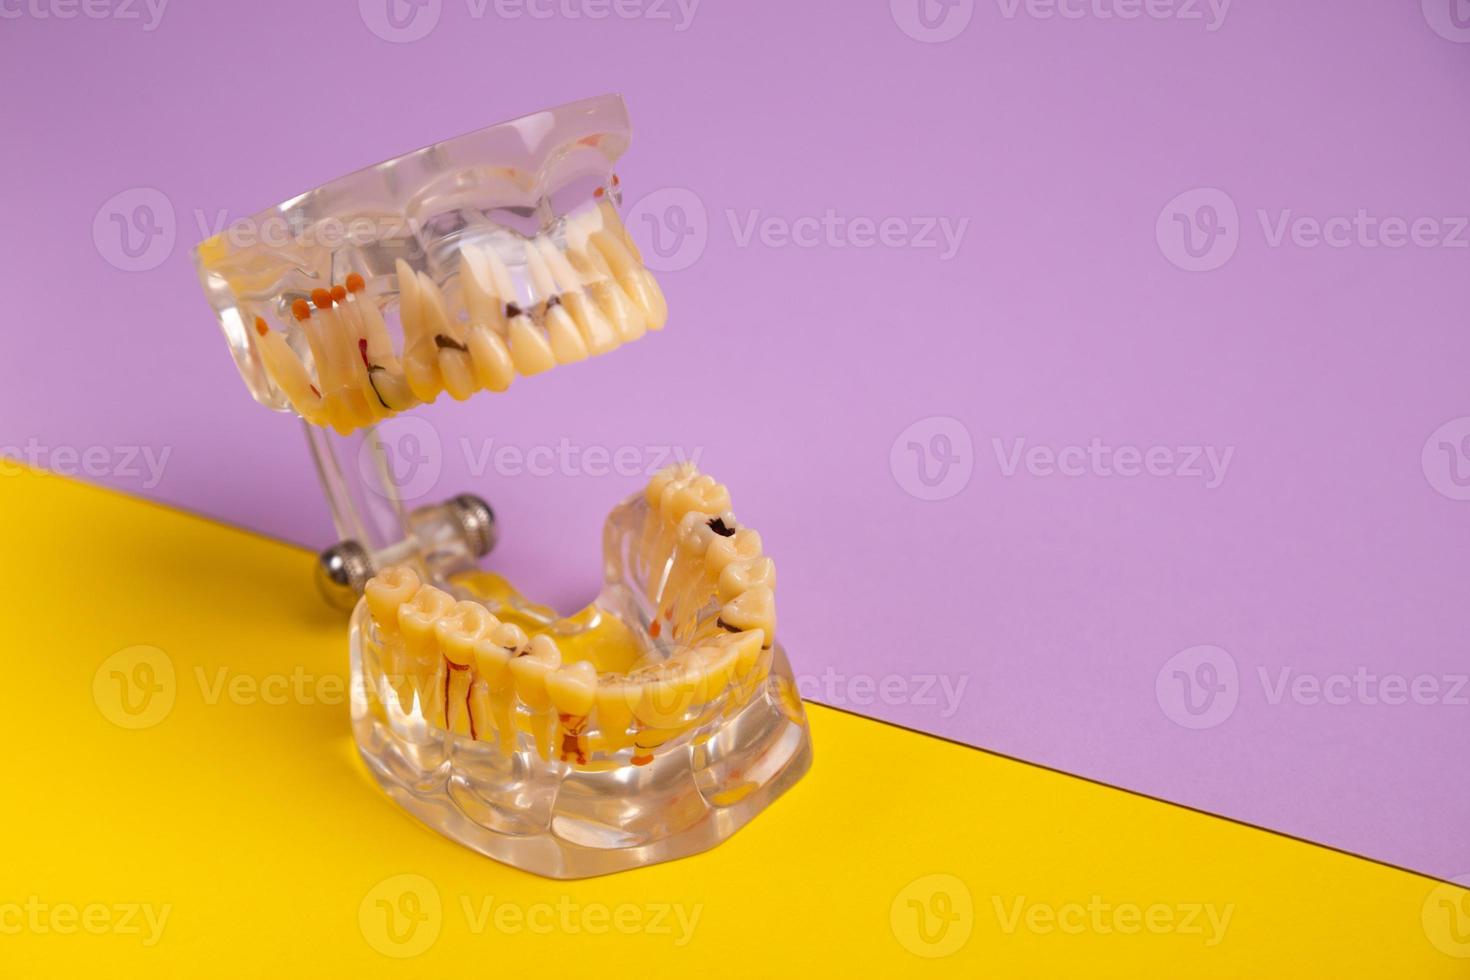 tandartshulpmiddelen en kunstmatige kaak op heldere gele en violette achtergrond. foto